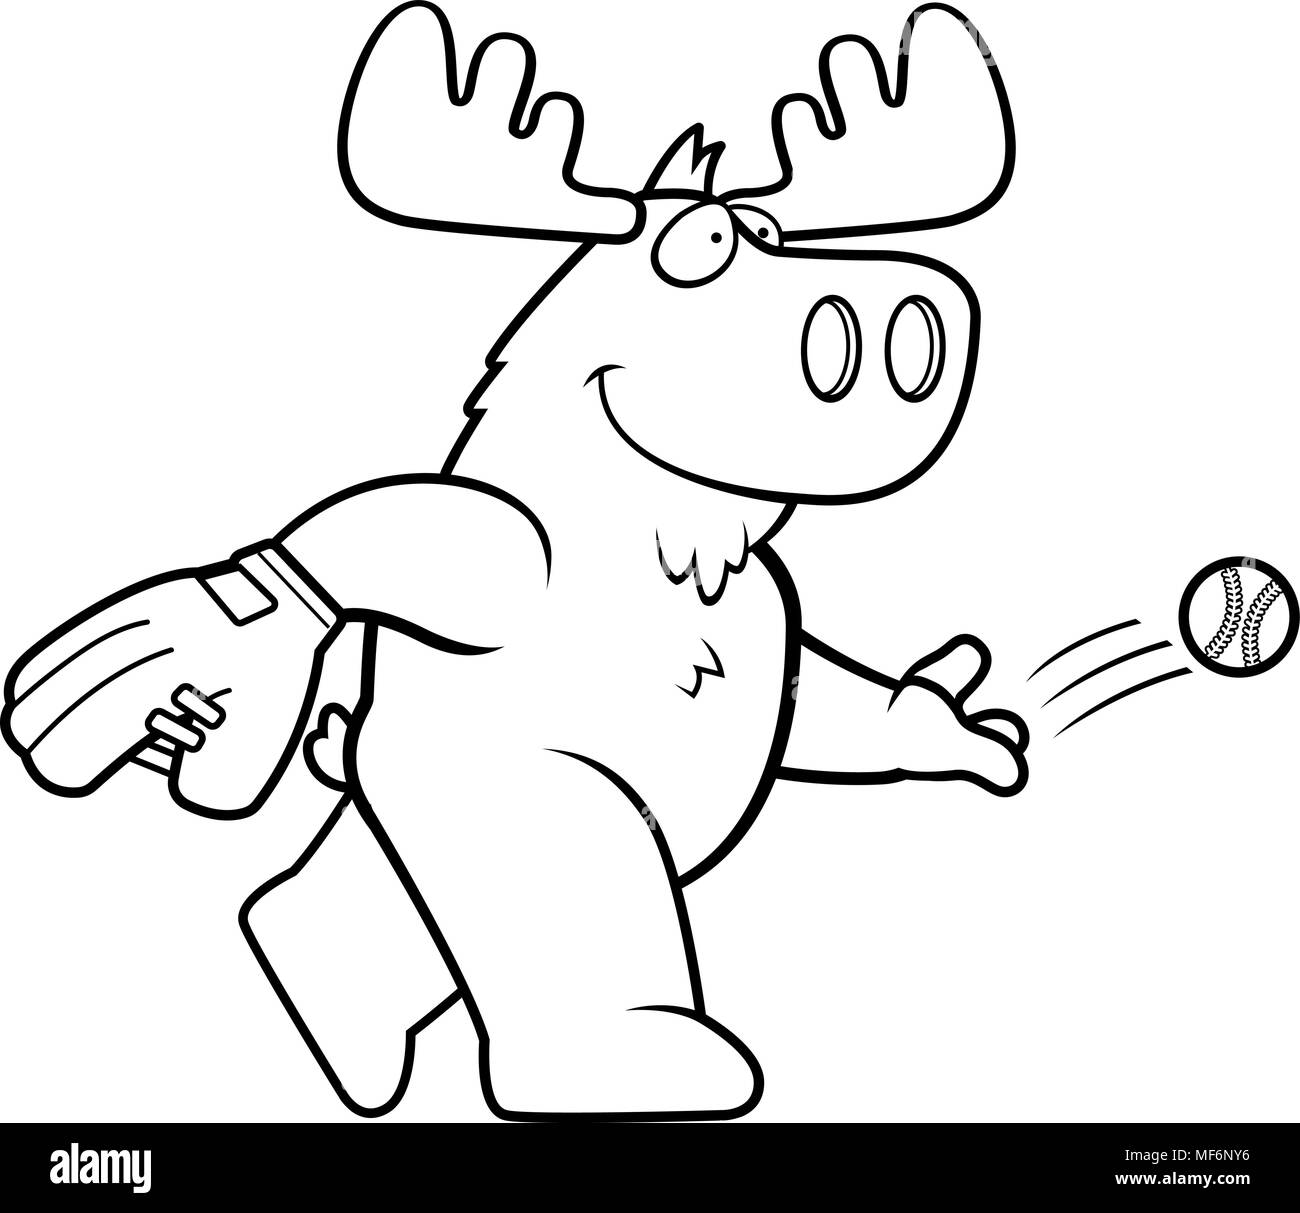 A cartoon illustration of a moose tossing a baseball. Stock Vector